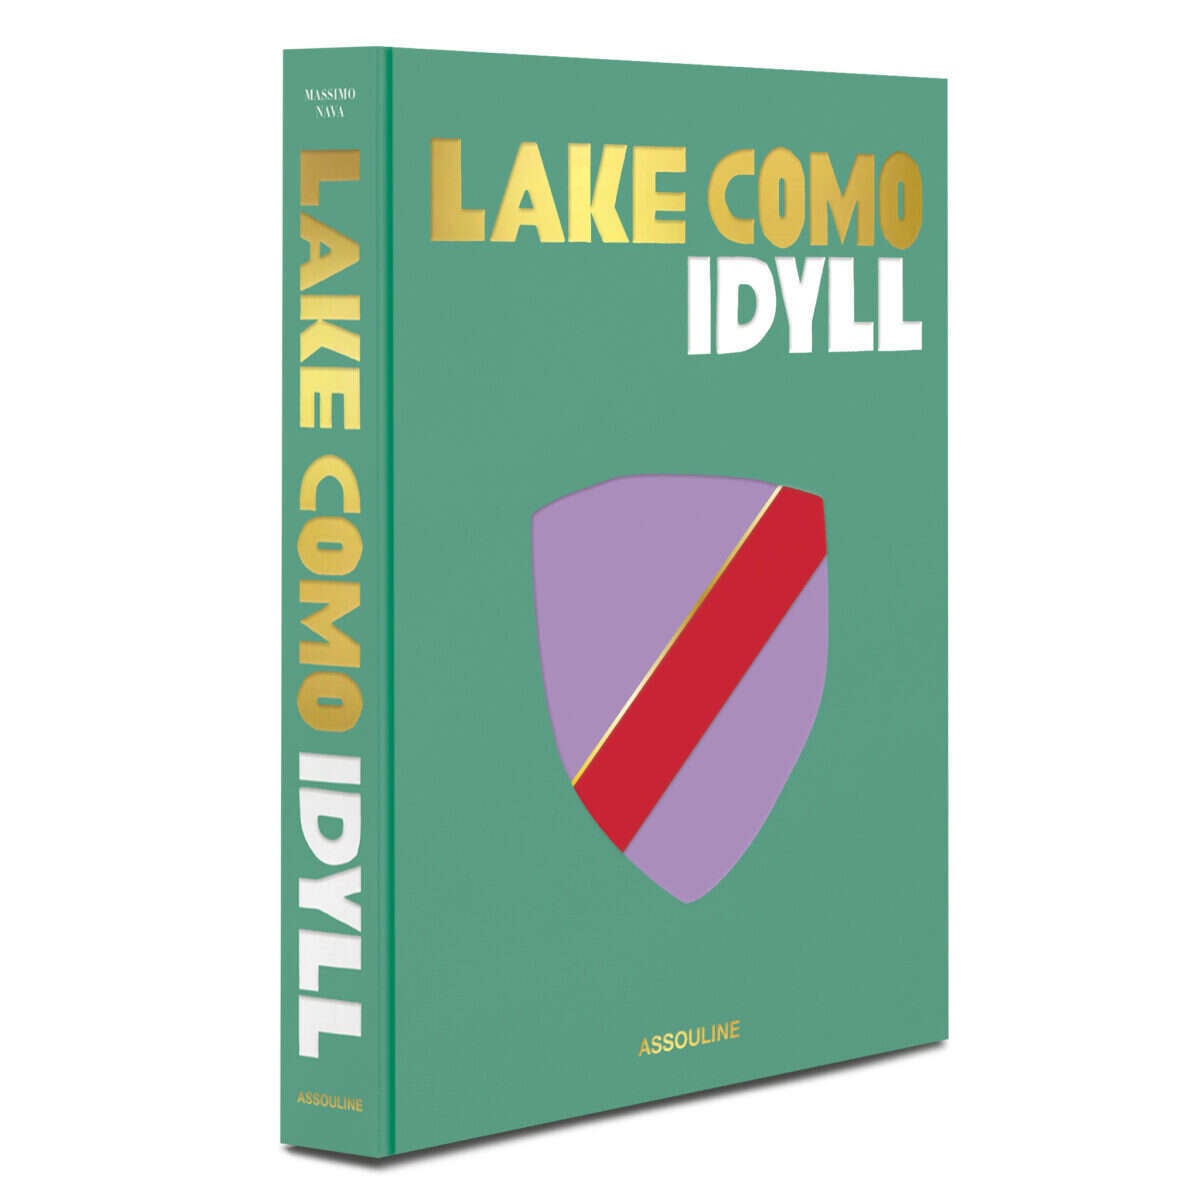 Lake Como -Idyll book cover Assouline